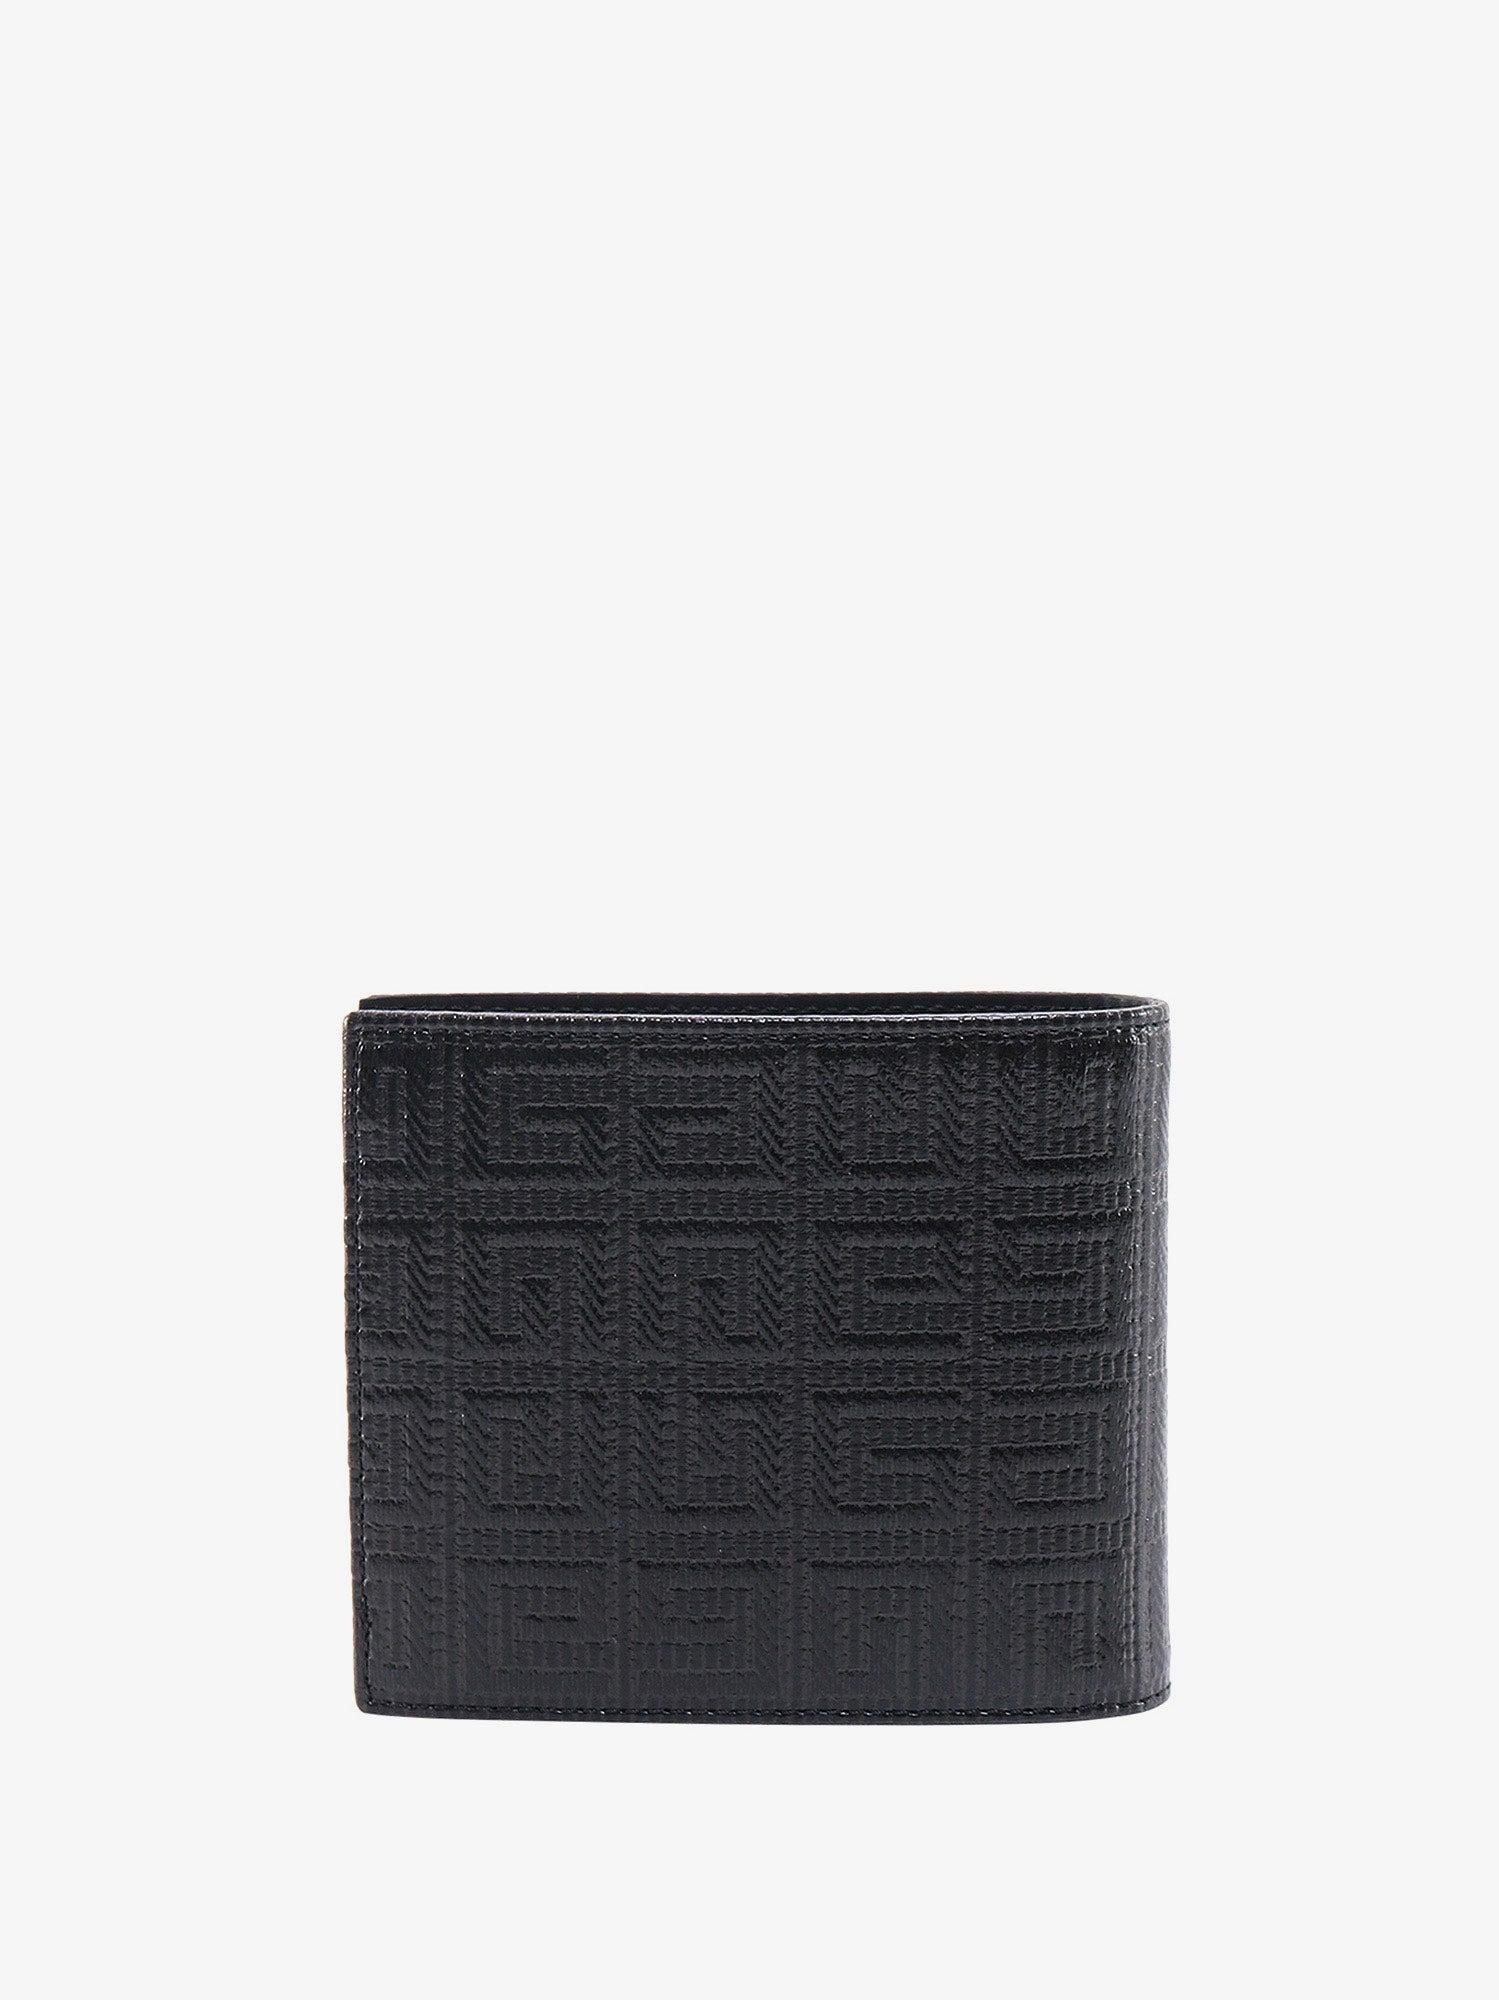 Givenchy Wallet in Black for Men | Lyst